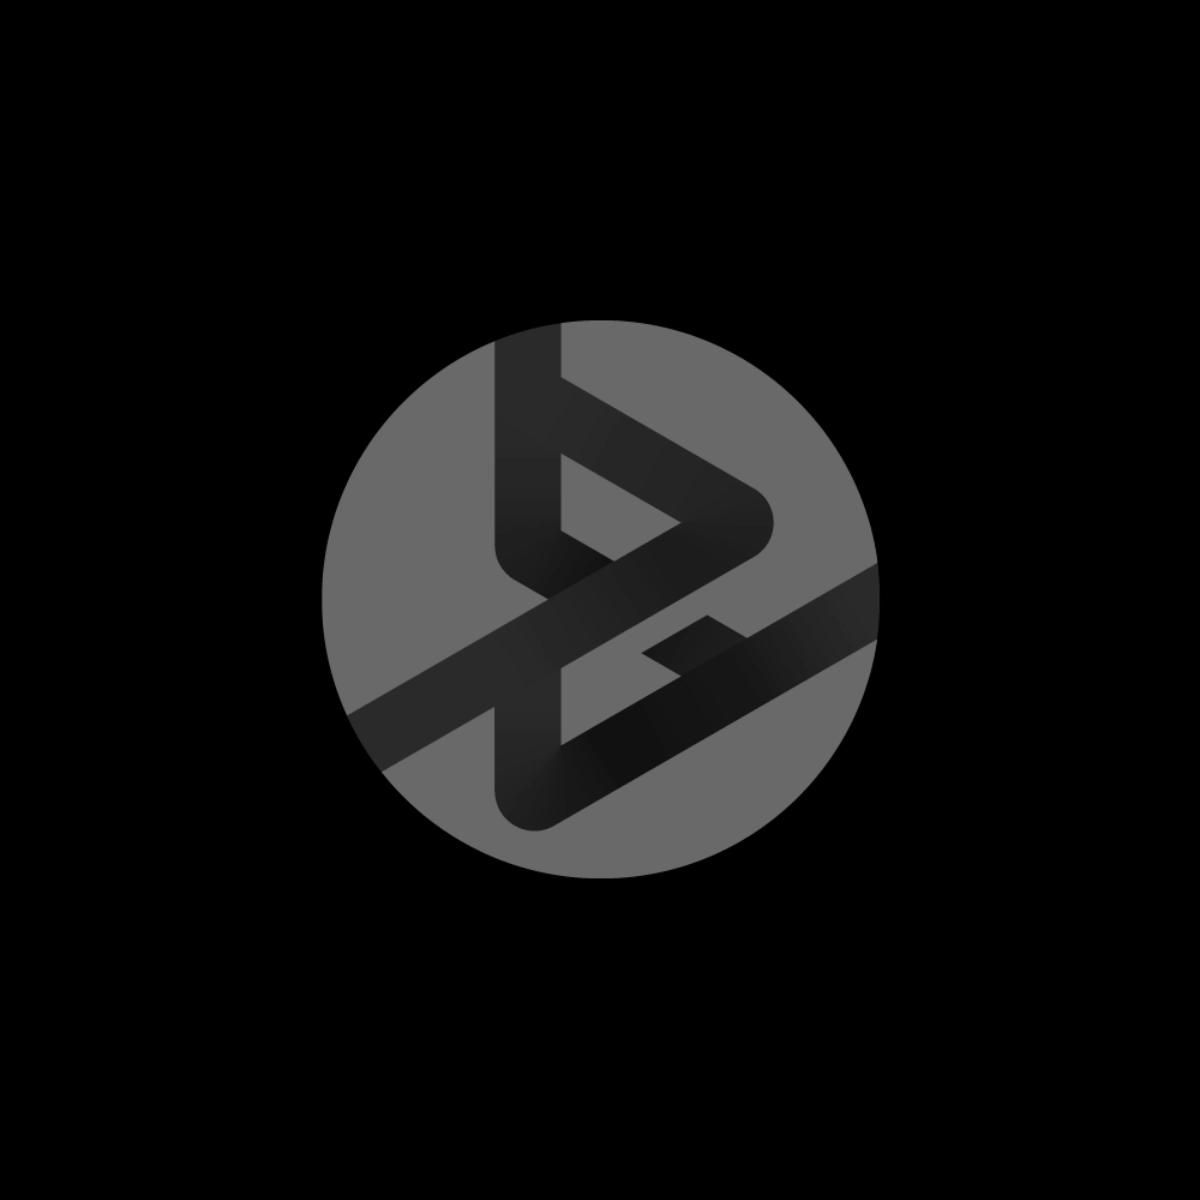 Letter B logo - How to design a simple text logo | Illustrator tutorial - Letter B logo - How to design a simple text logo | Illustrator tutorial -   16 fitness Logo cute ideas